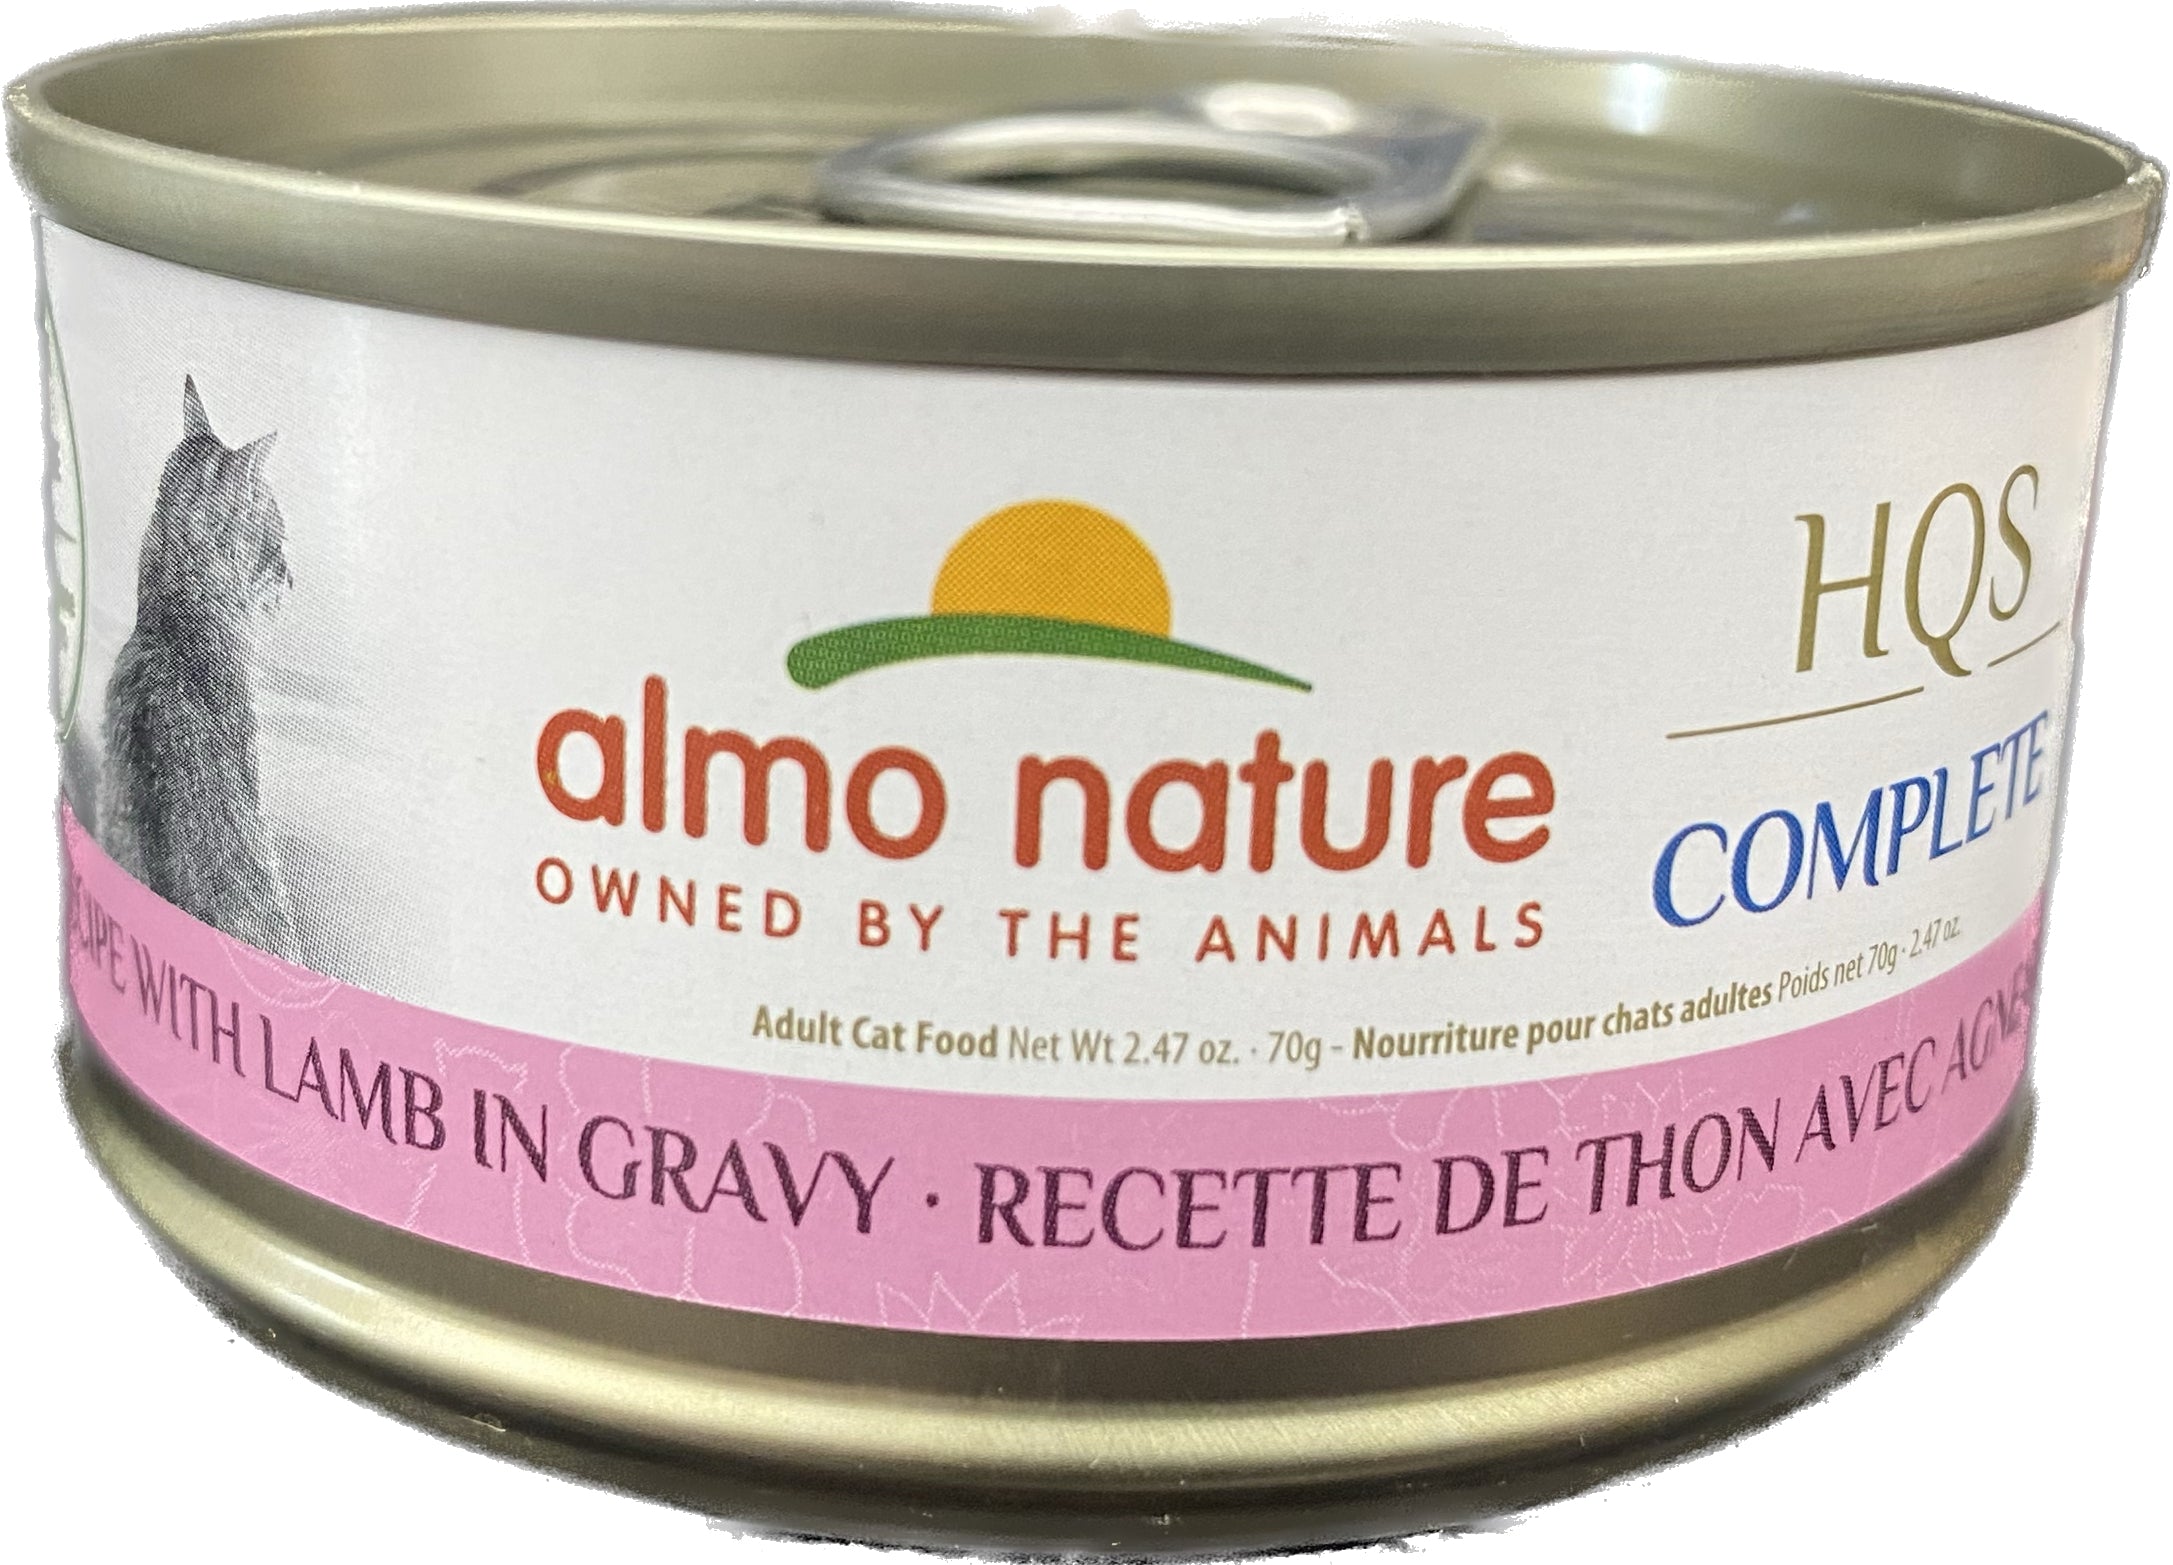 Almo Nature Complete Tuna With Lamb In Gravy